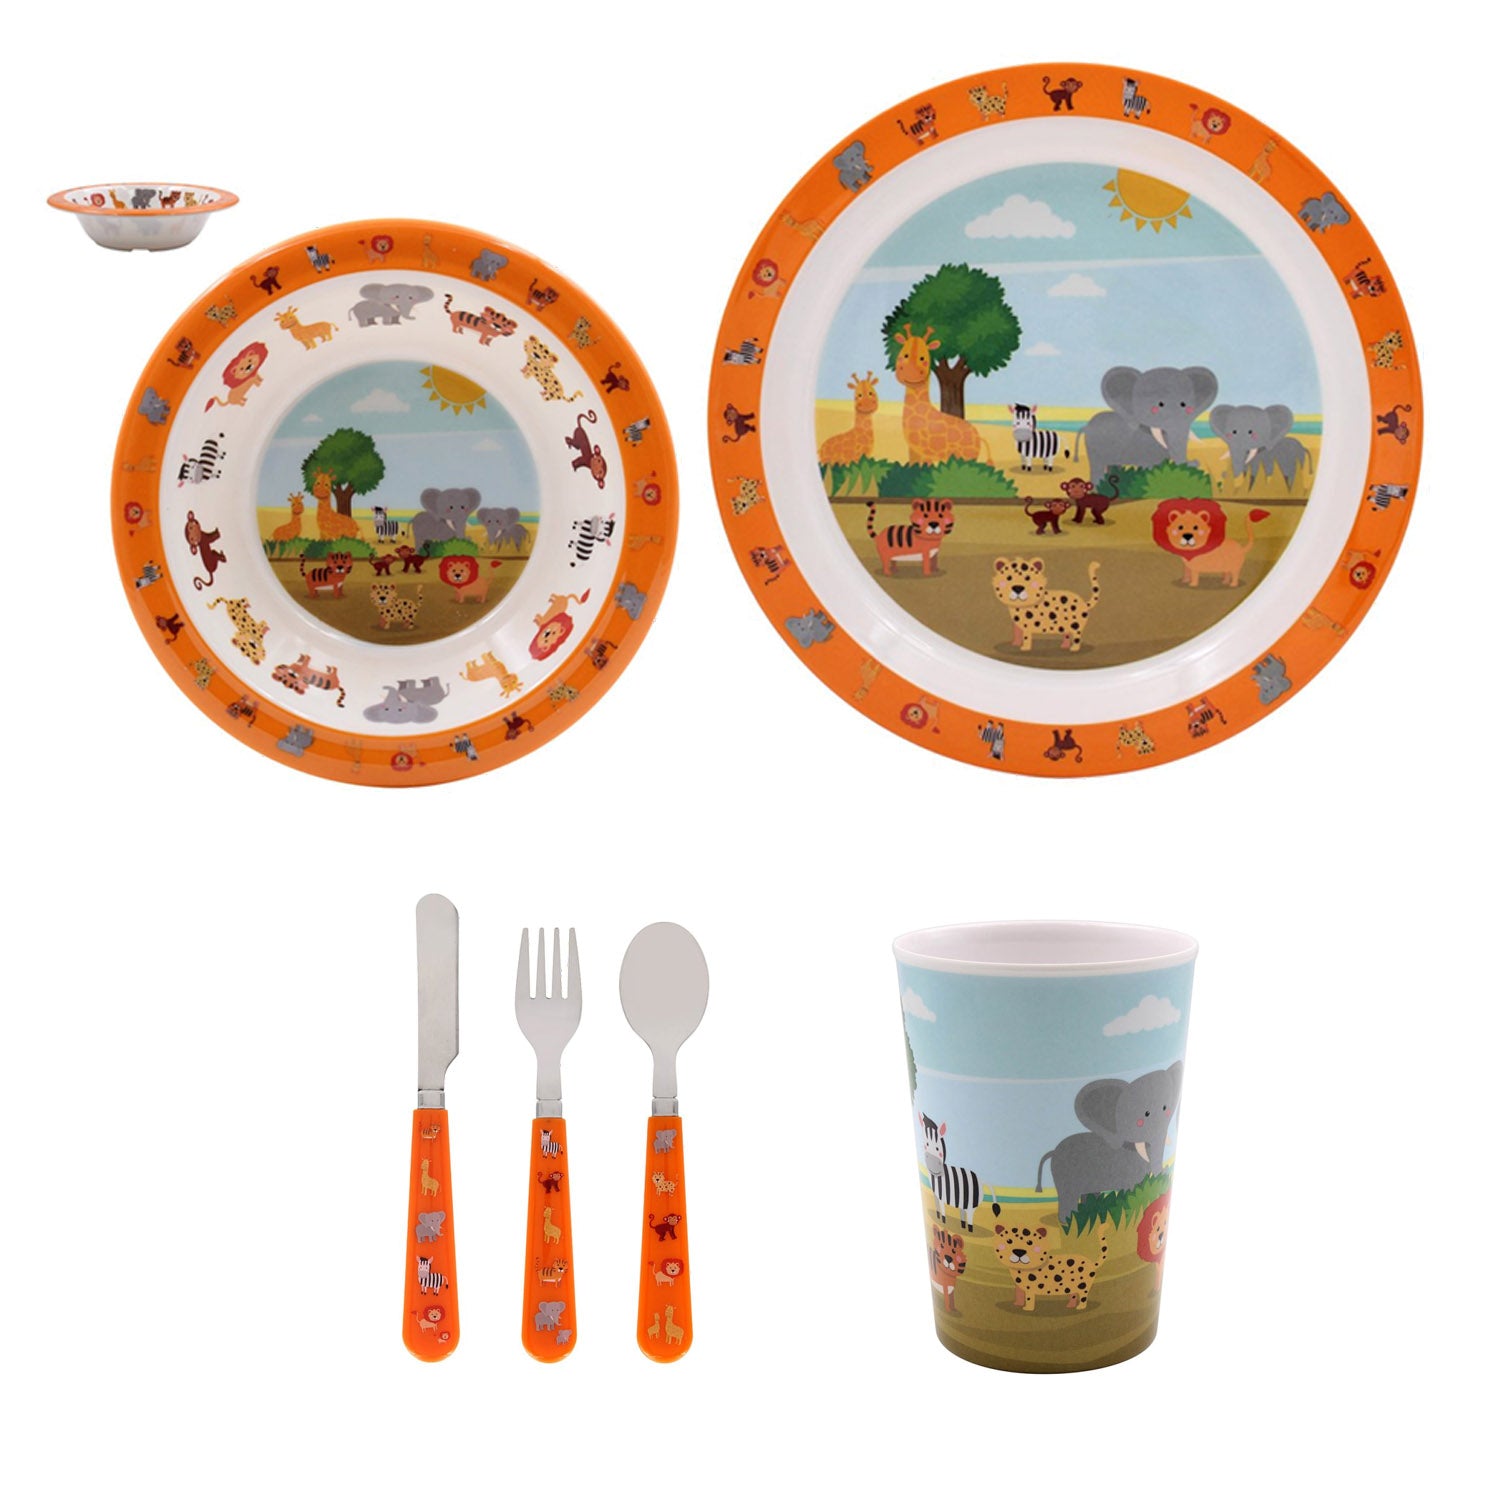 4-Piece Orange Zoo Animal Dining Set for Kids